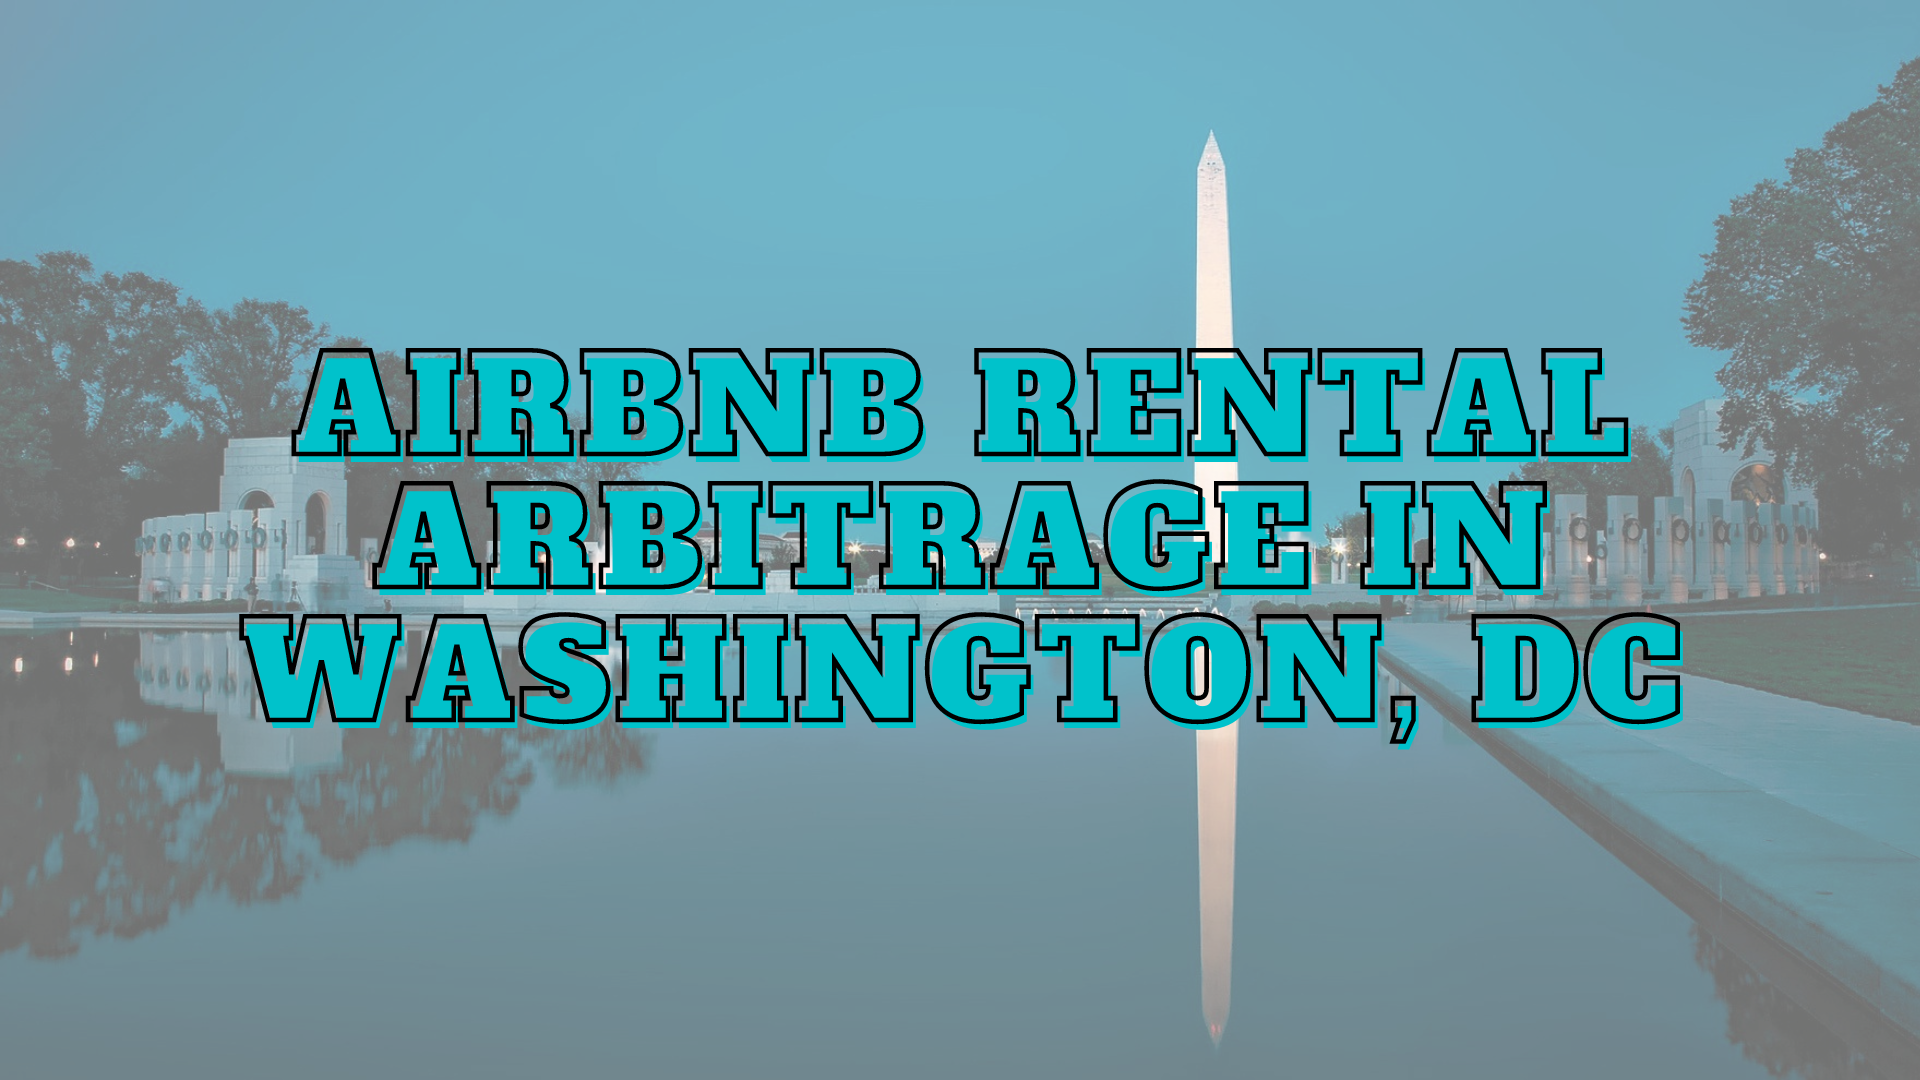 Washington airbnb rental arbitrage